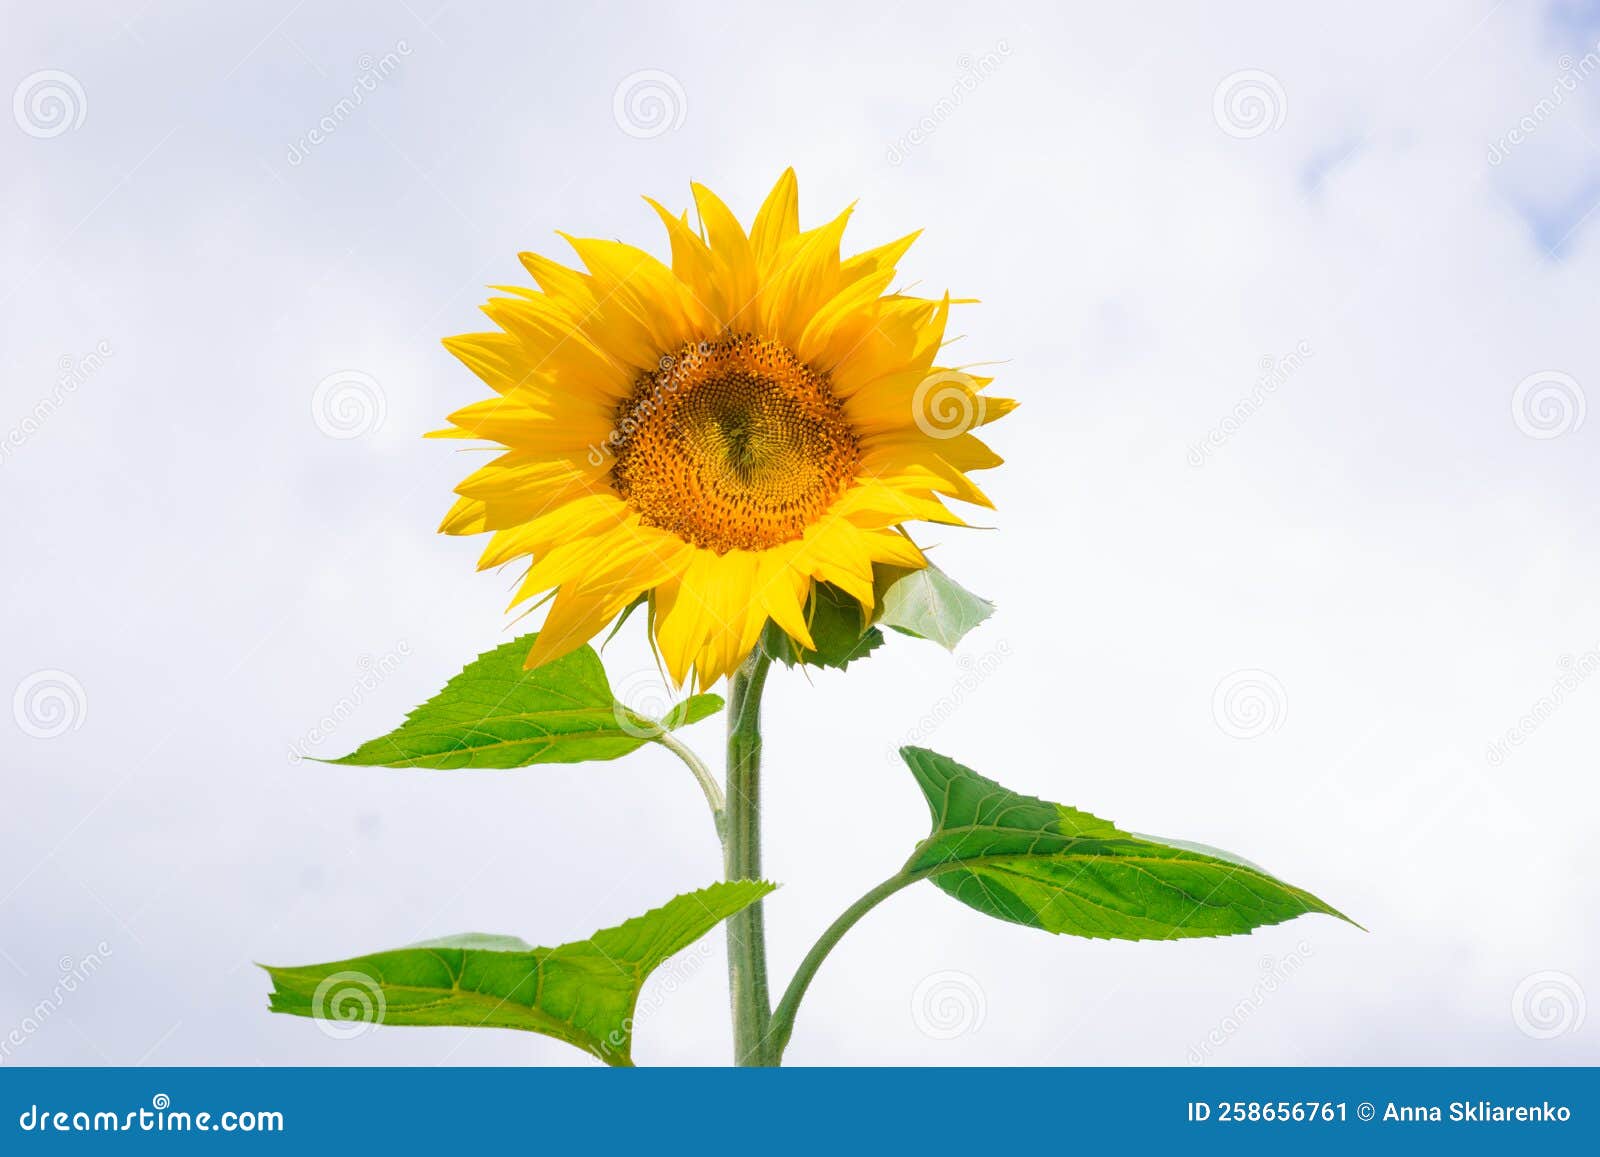 21 Immature Sunflower Stock Photos   Free & Royalty Free Stock ...